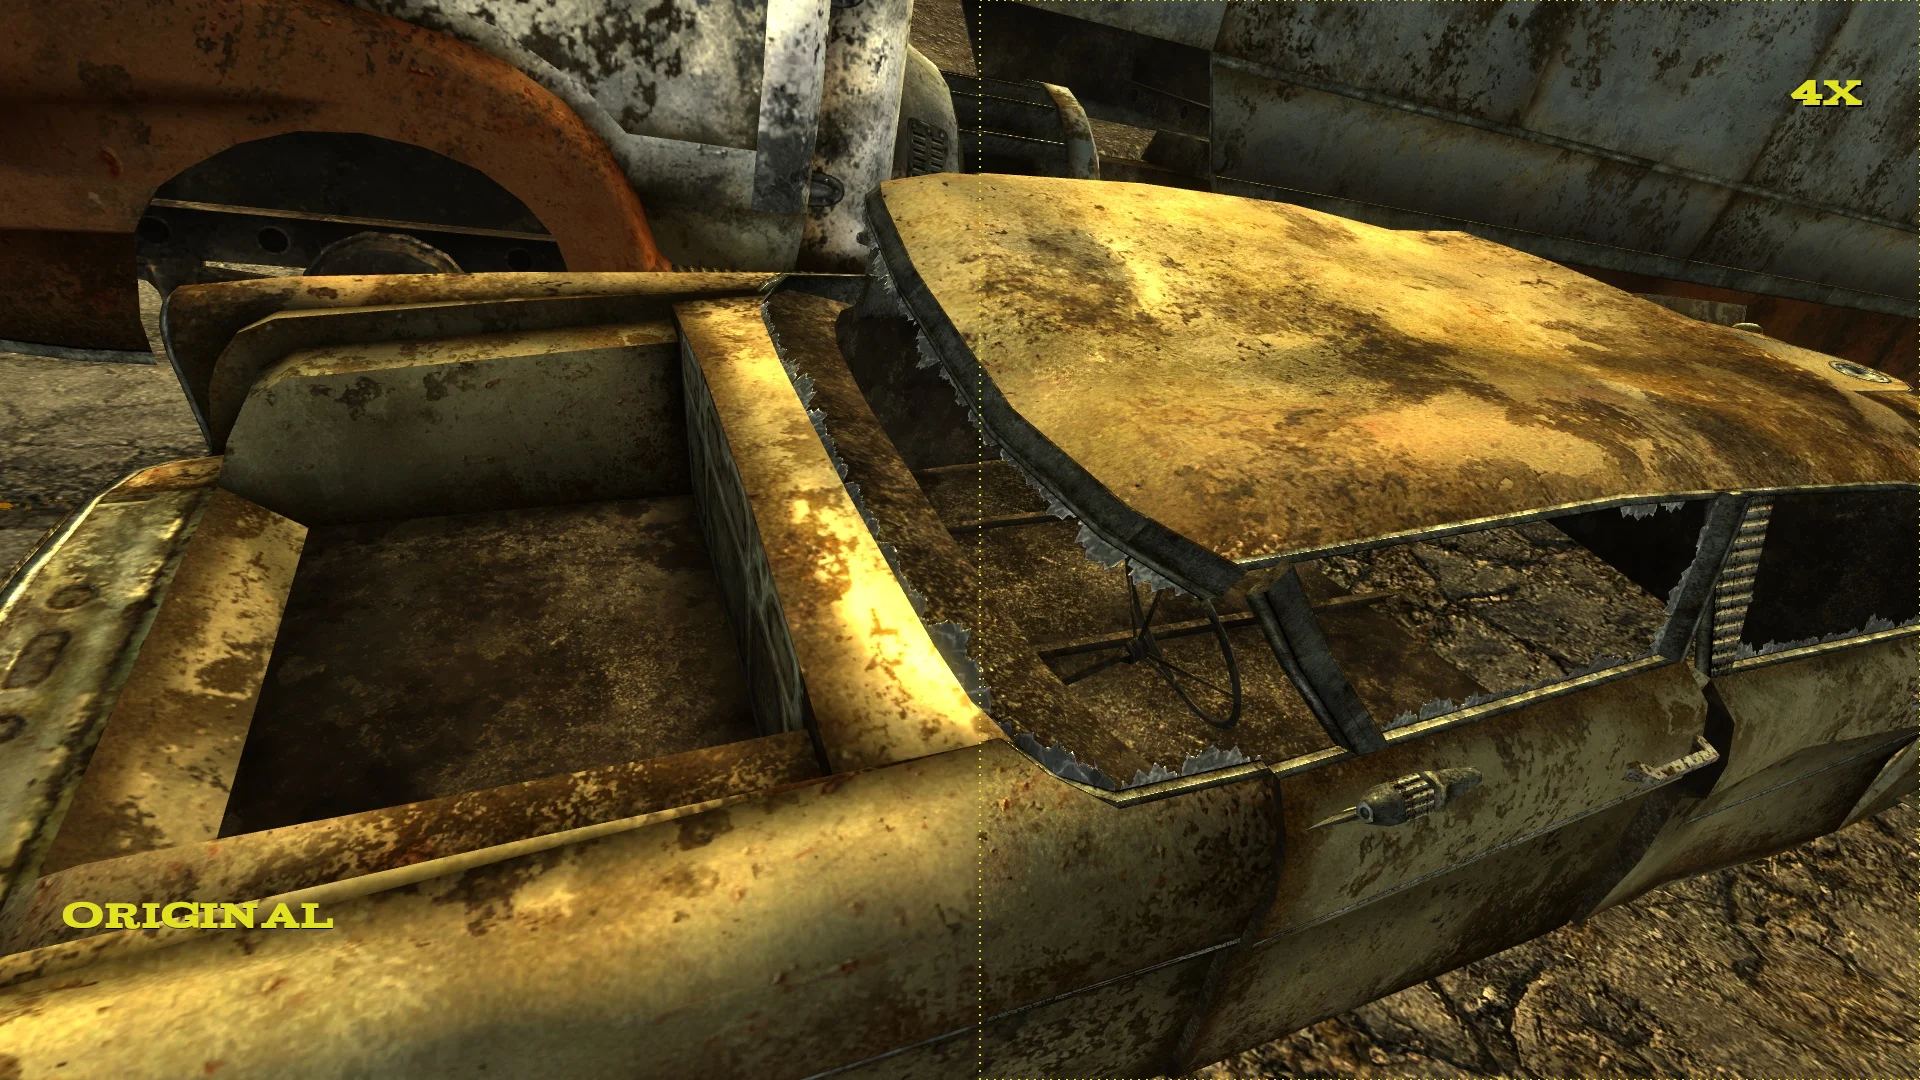 Фанат Fallout: New Vegas улучшил в несколько раз качество текстур в игре с помощью нейросетей - фото 4